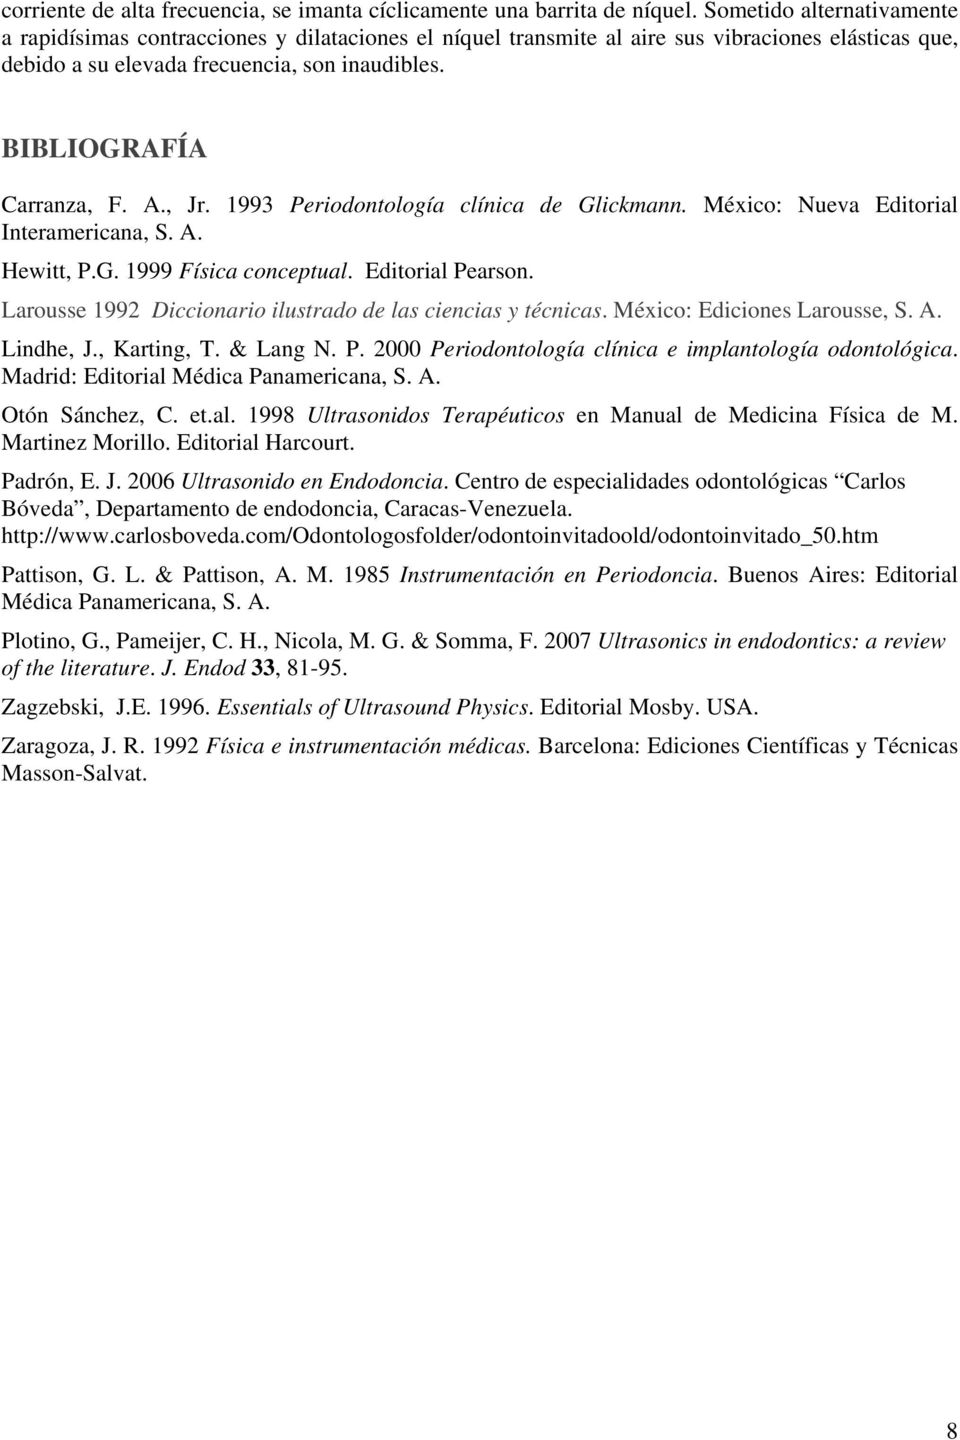 BIBLIOGRAFÍA Carranza, F. A., Jr. 1993 Periodontología clínica de Glickmann. México: Nueva Editorial Interamericana, S. A. Hewitt, P.G. 1999 Física conceptual. Editorial Pearson.